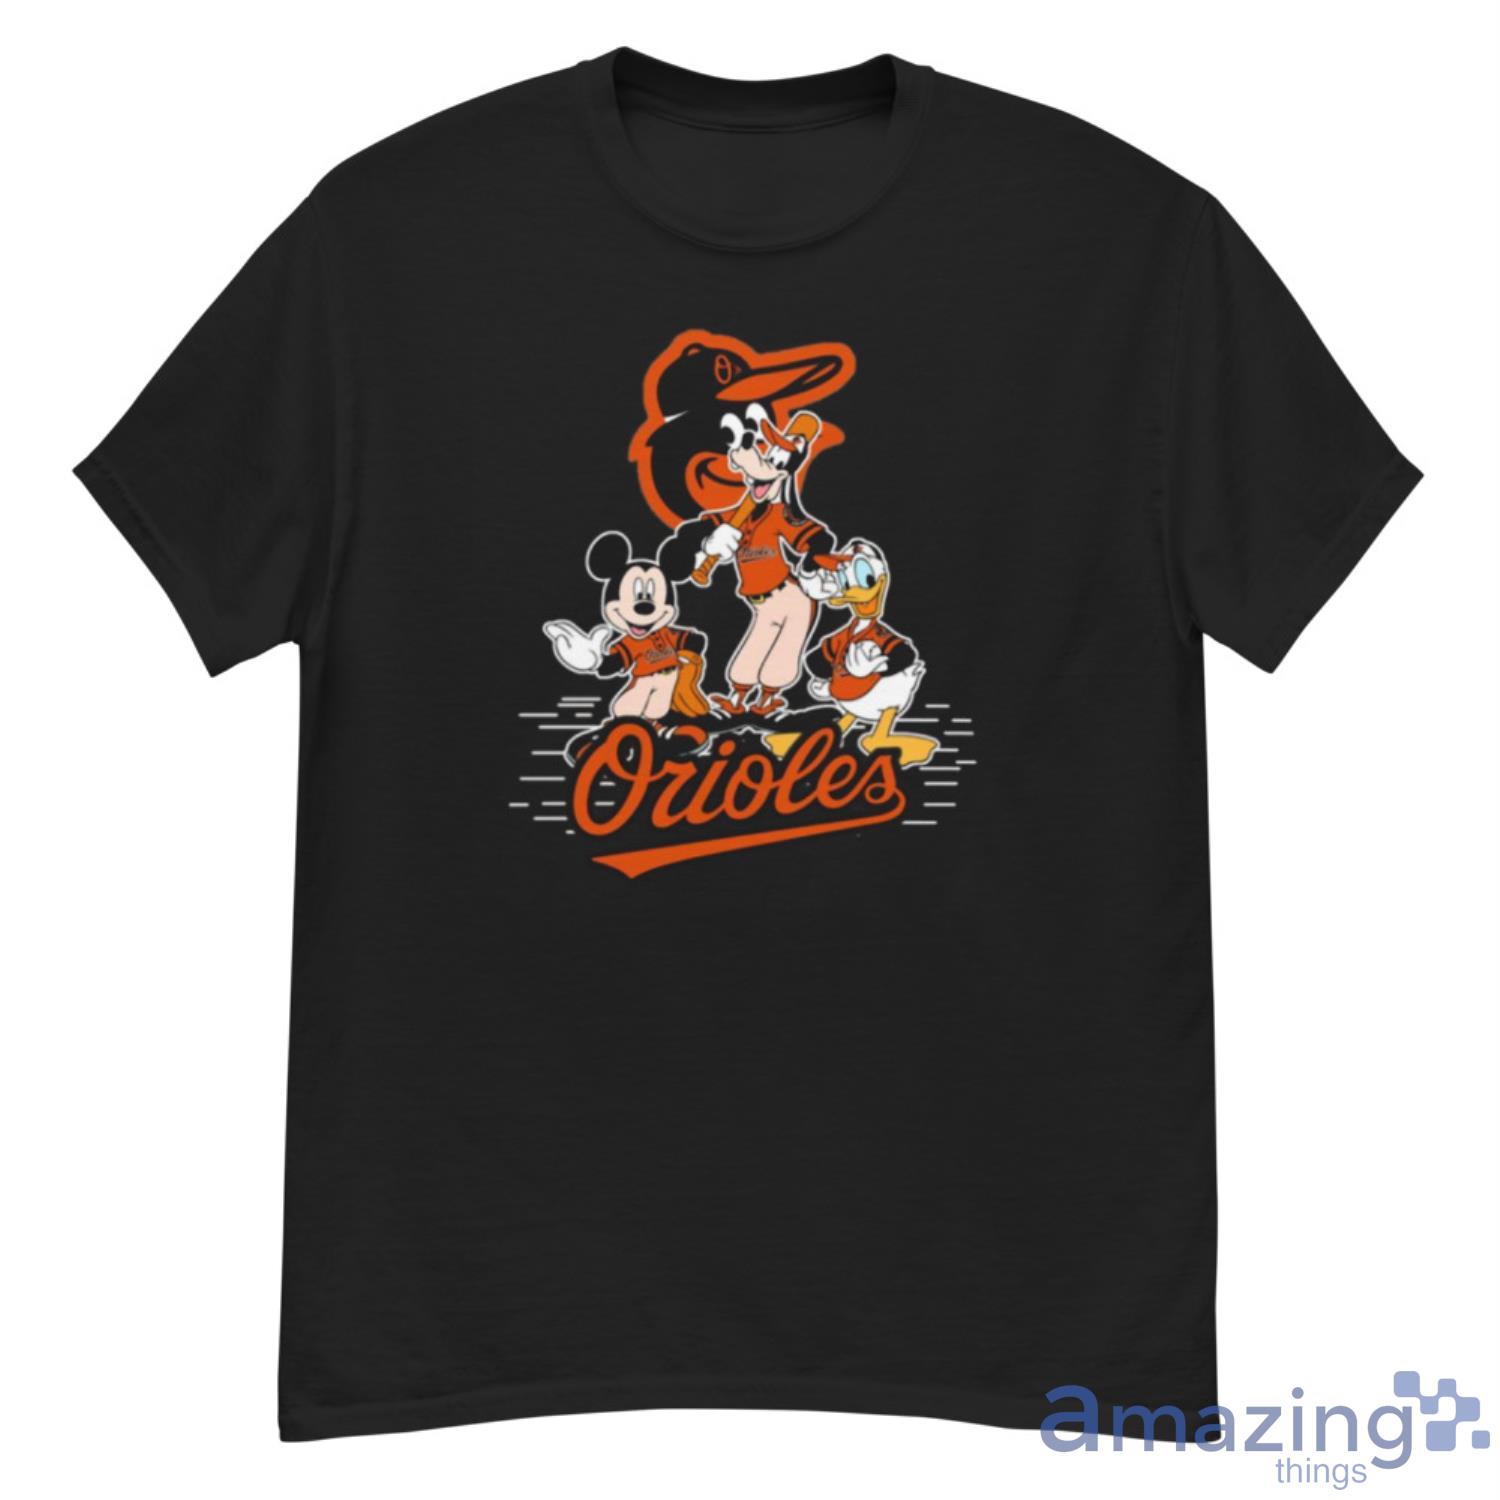 MLB Baltimore Orioles Men's Polo T-Shirt - S